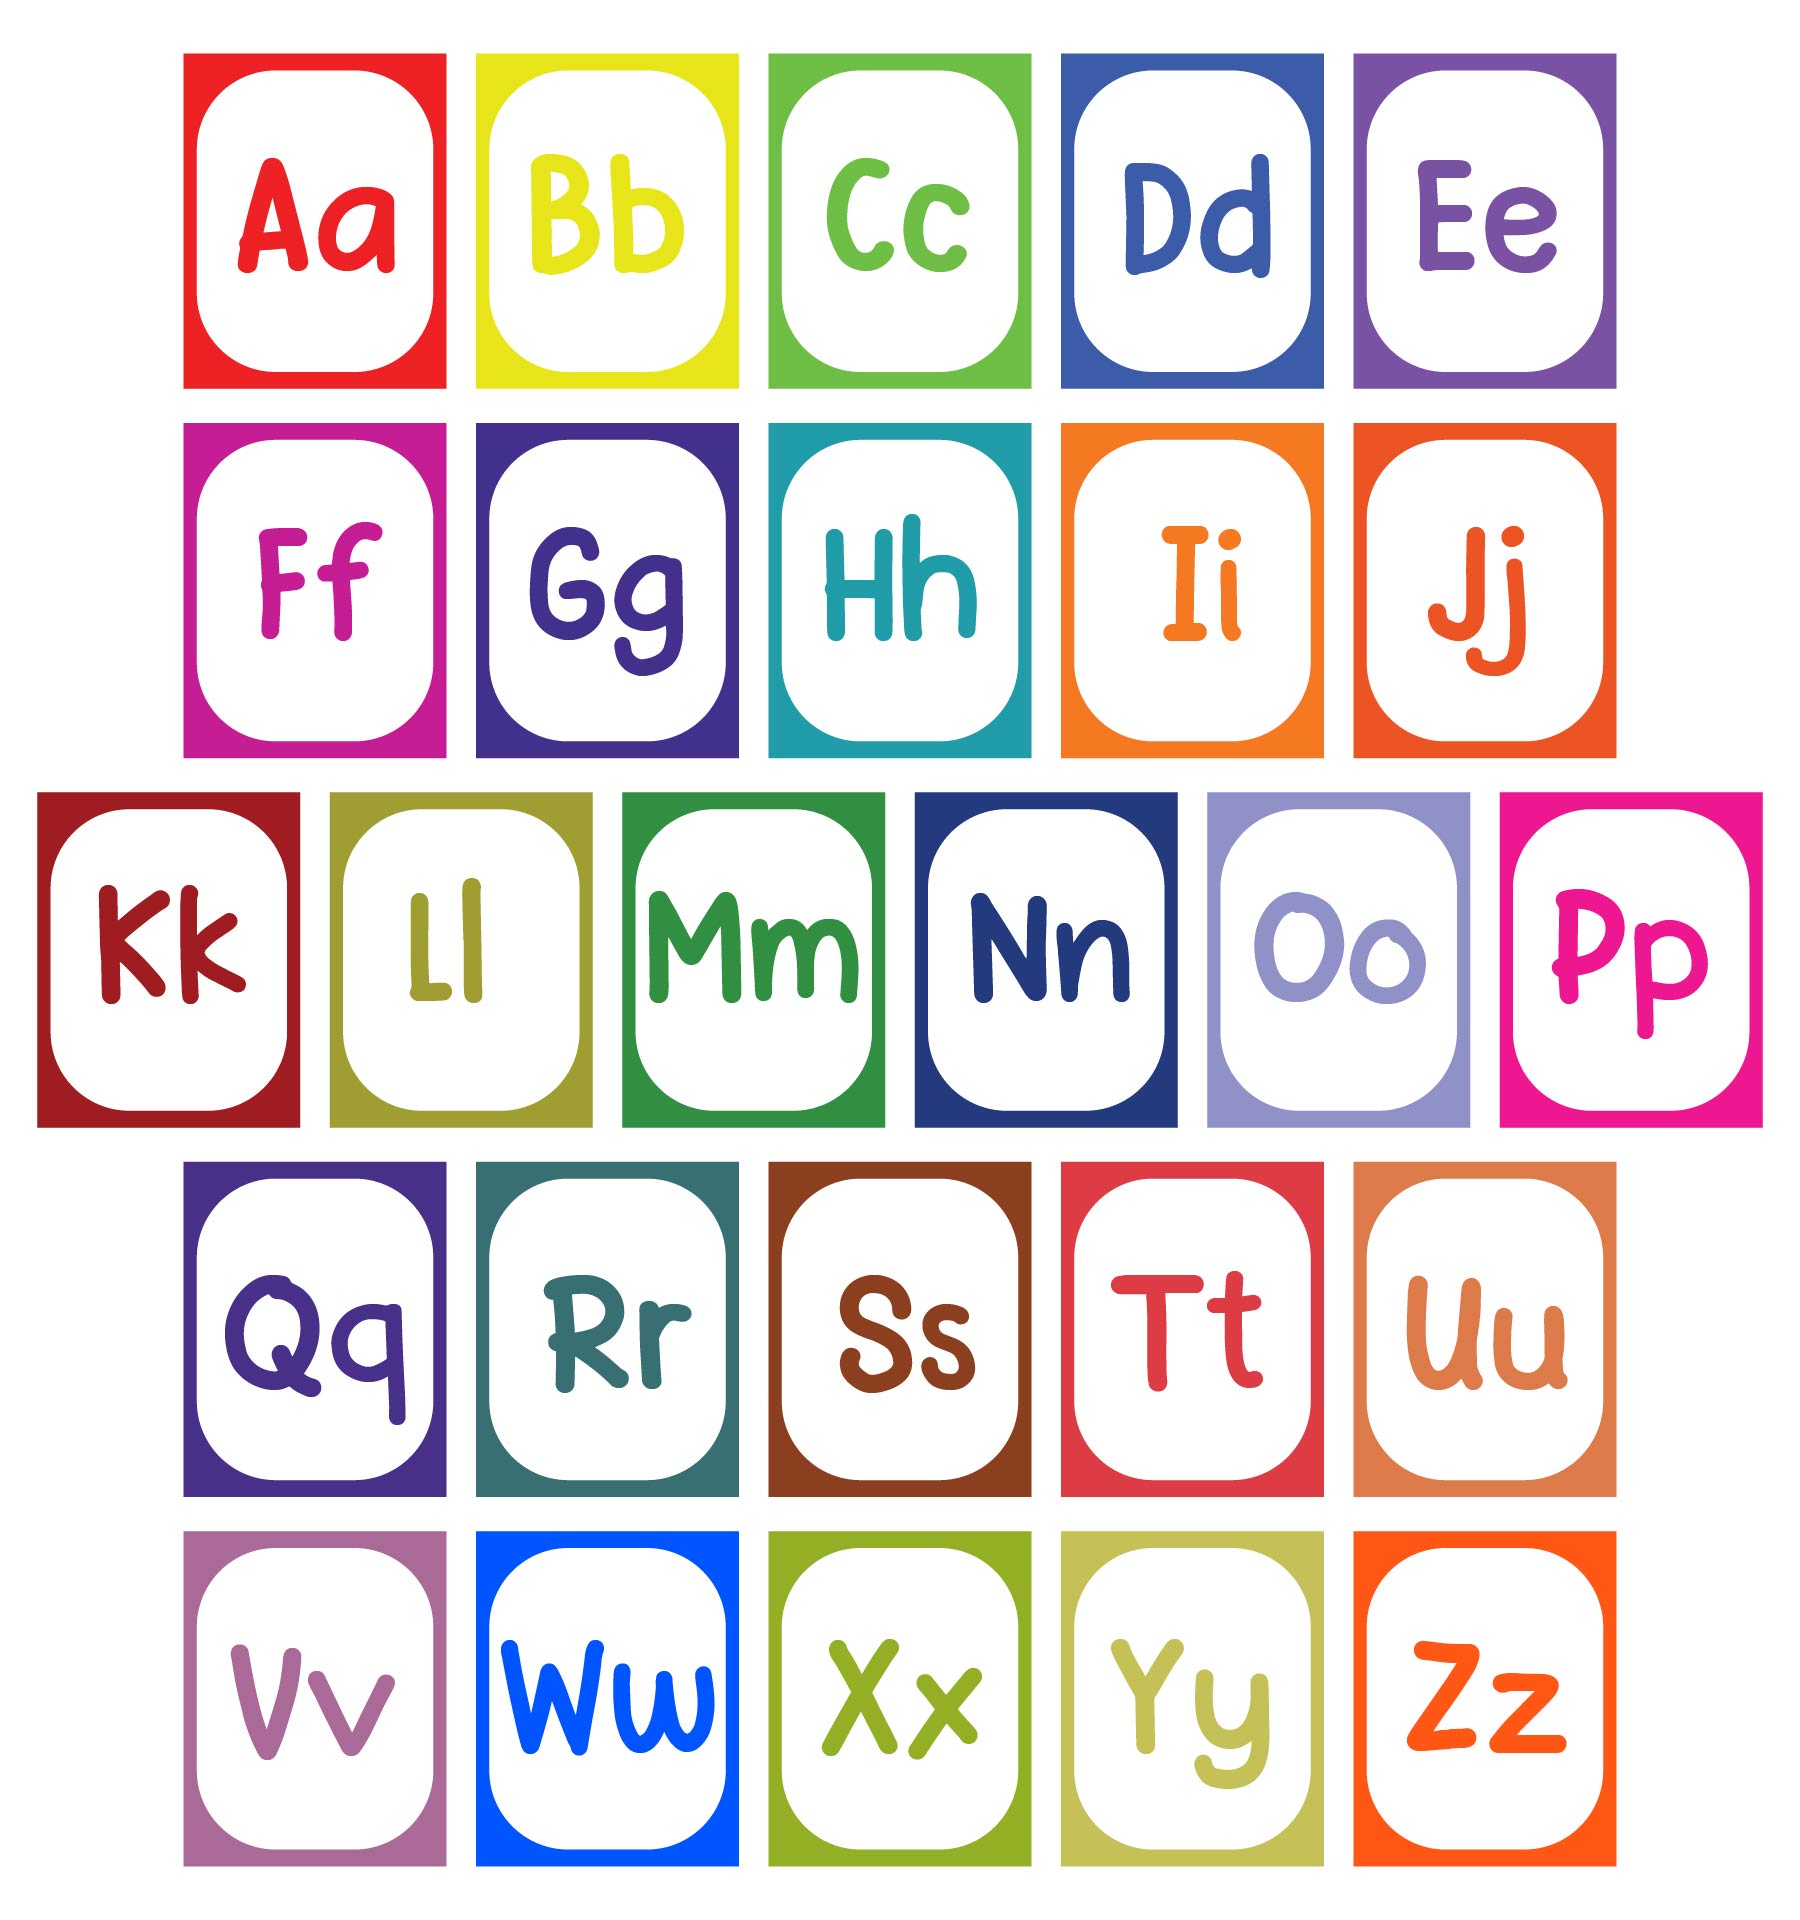 Alphabet Block Letter Large Size - 10 Free PDF Printables | Printablee